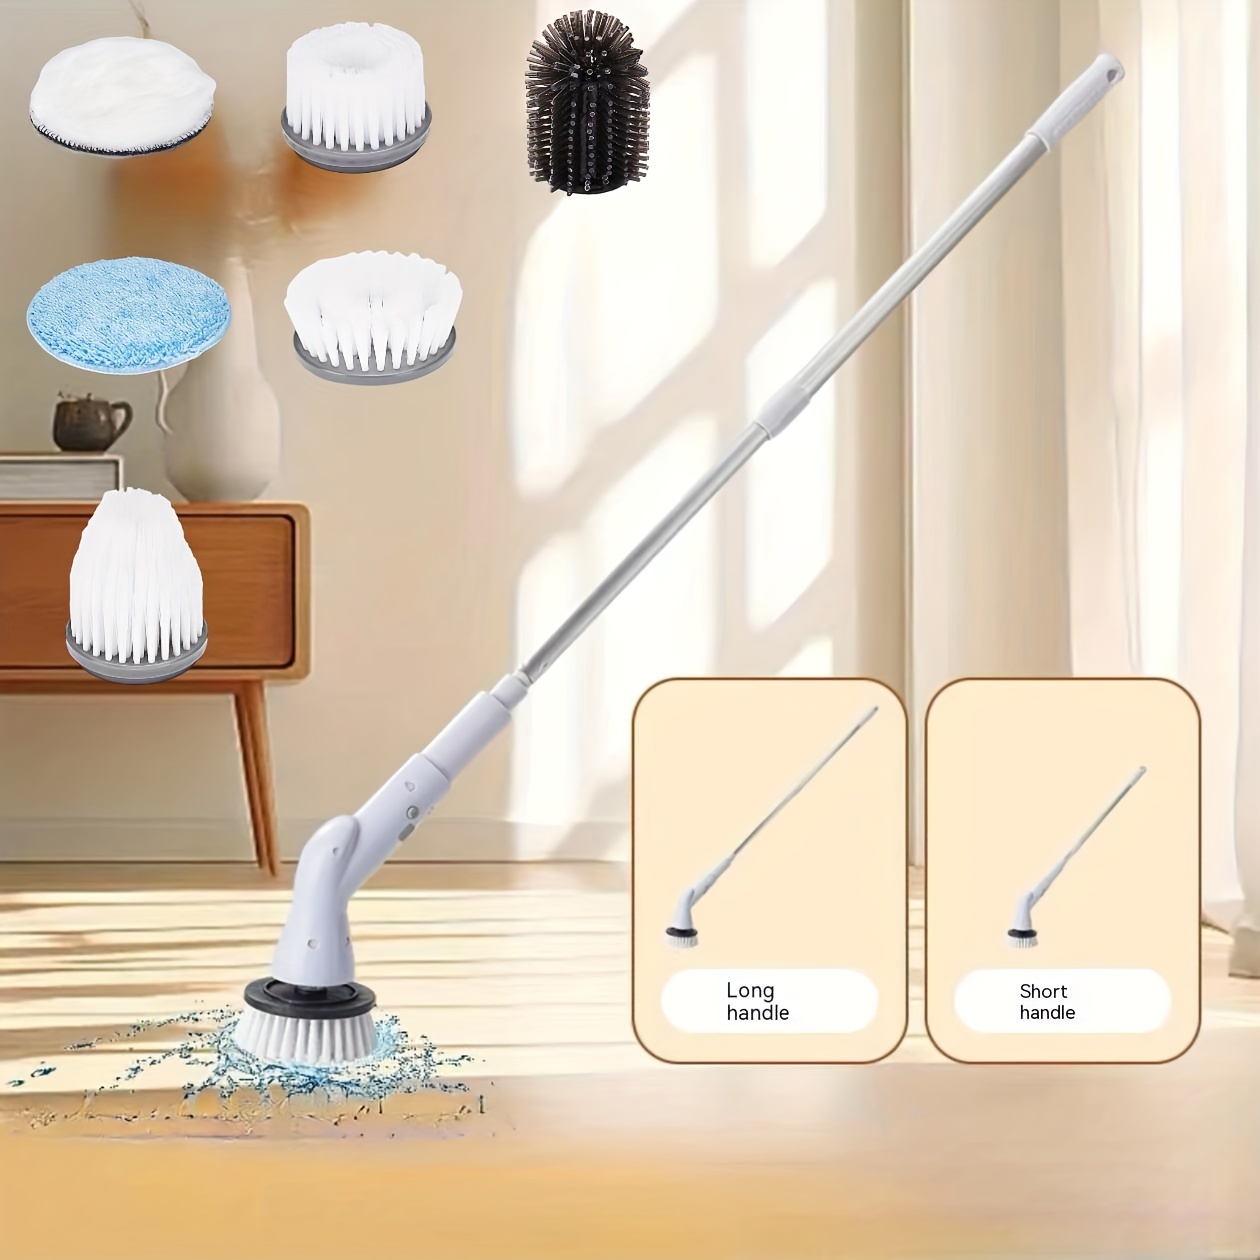 Floor Scrub Brush with Long Handle, Adjustable Magic Broom Brush 2 in 1  Cleaning Scrub Brush 120 Degree Triangular Rotating Brush Head Removable